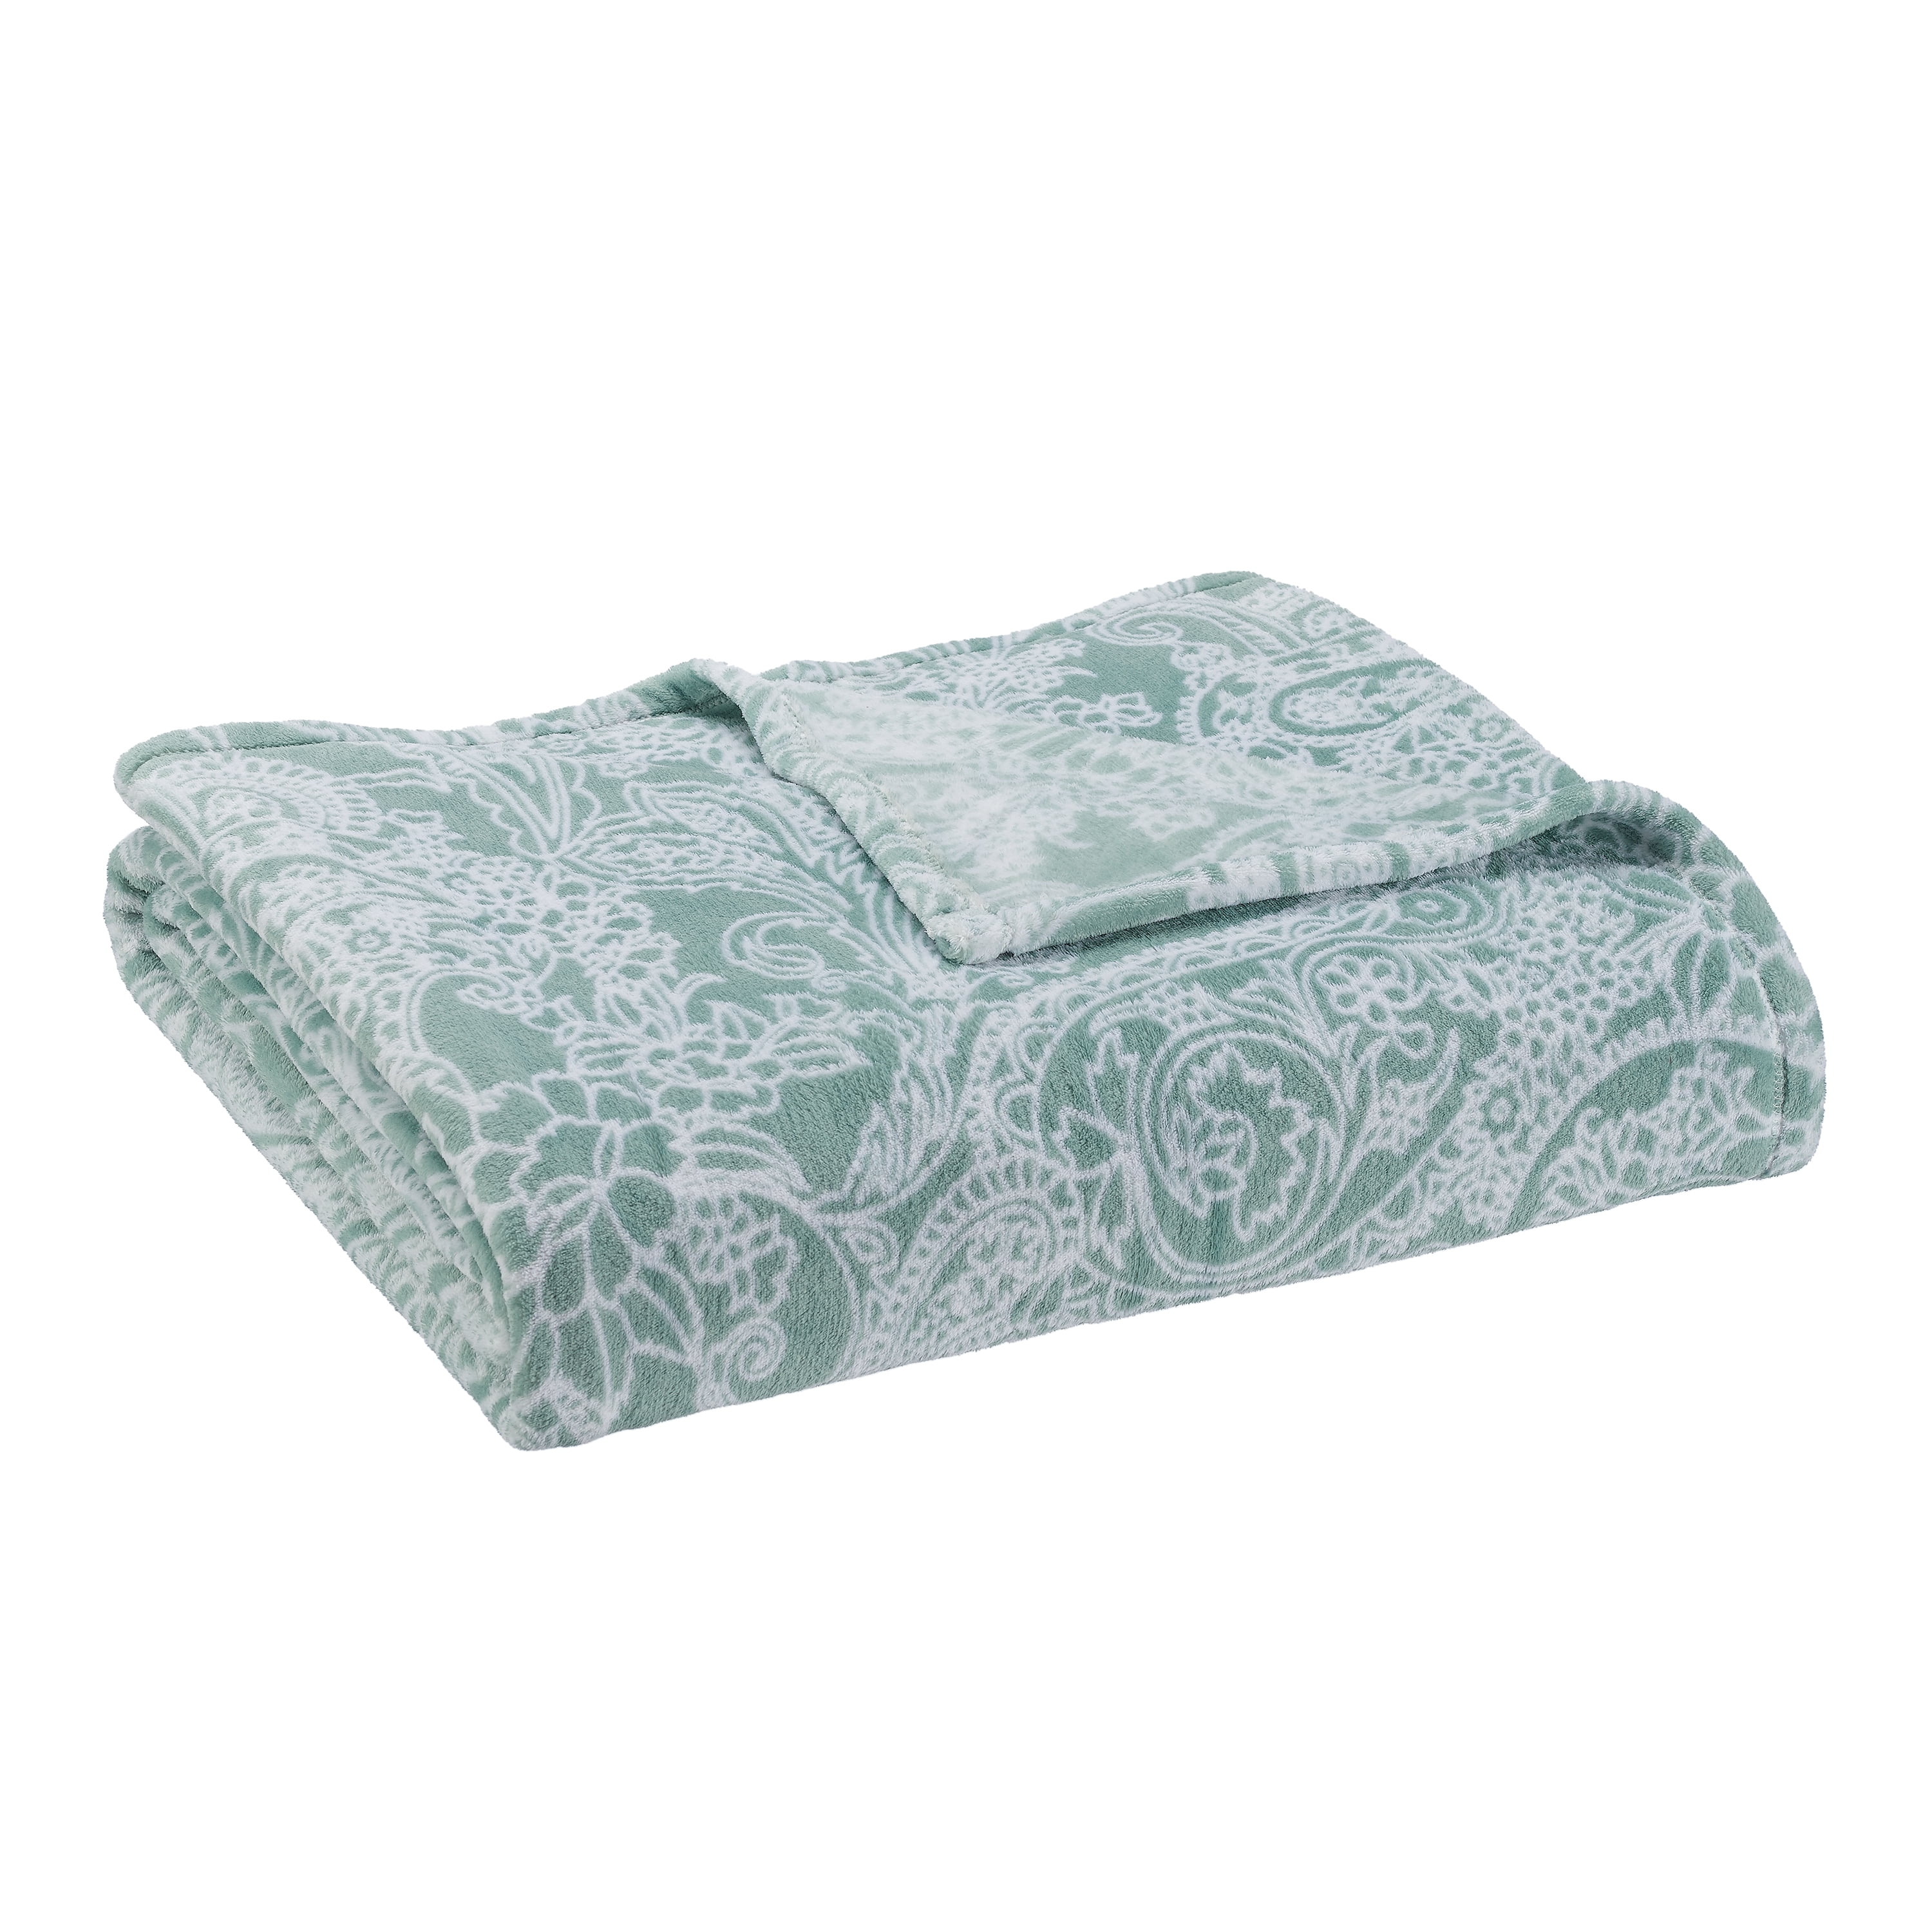 Jikokuten Paisley Super Soft Flannel Blanket Lightweight Comfortable Luxury Throw Warm Queen Plush Cozy Twin Bed Sofa Office Camping Meduim：6050in 